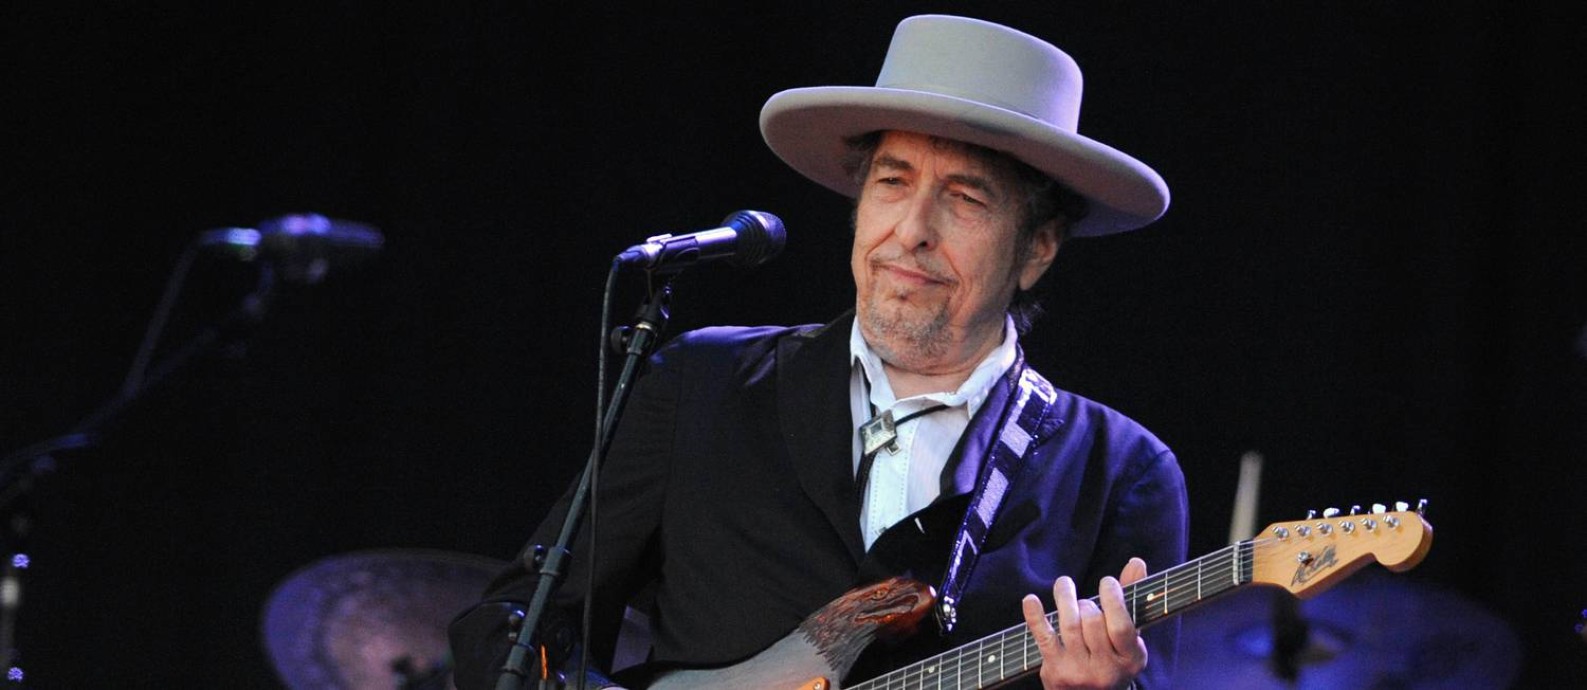 O cantor Bob Dylan Foto:
/
AFP /
FRED TANNEAU
